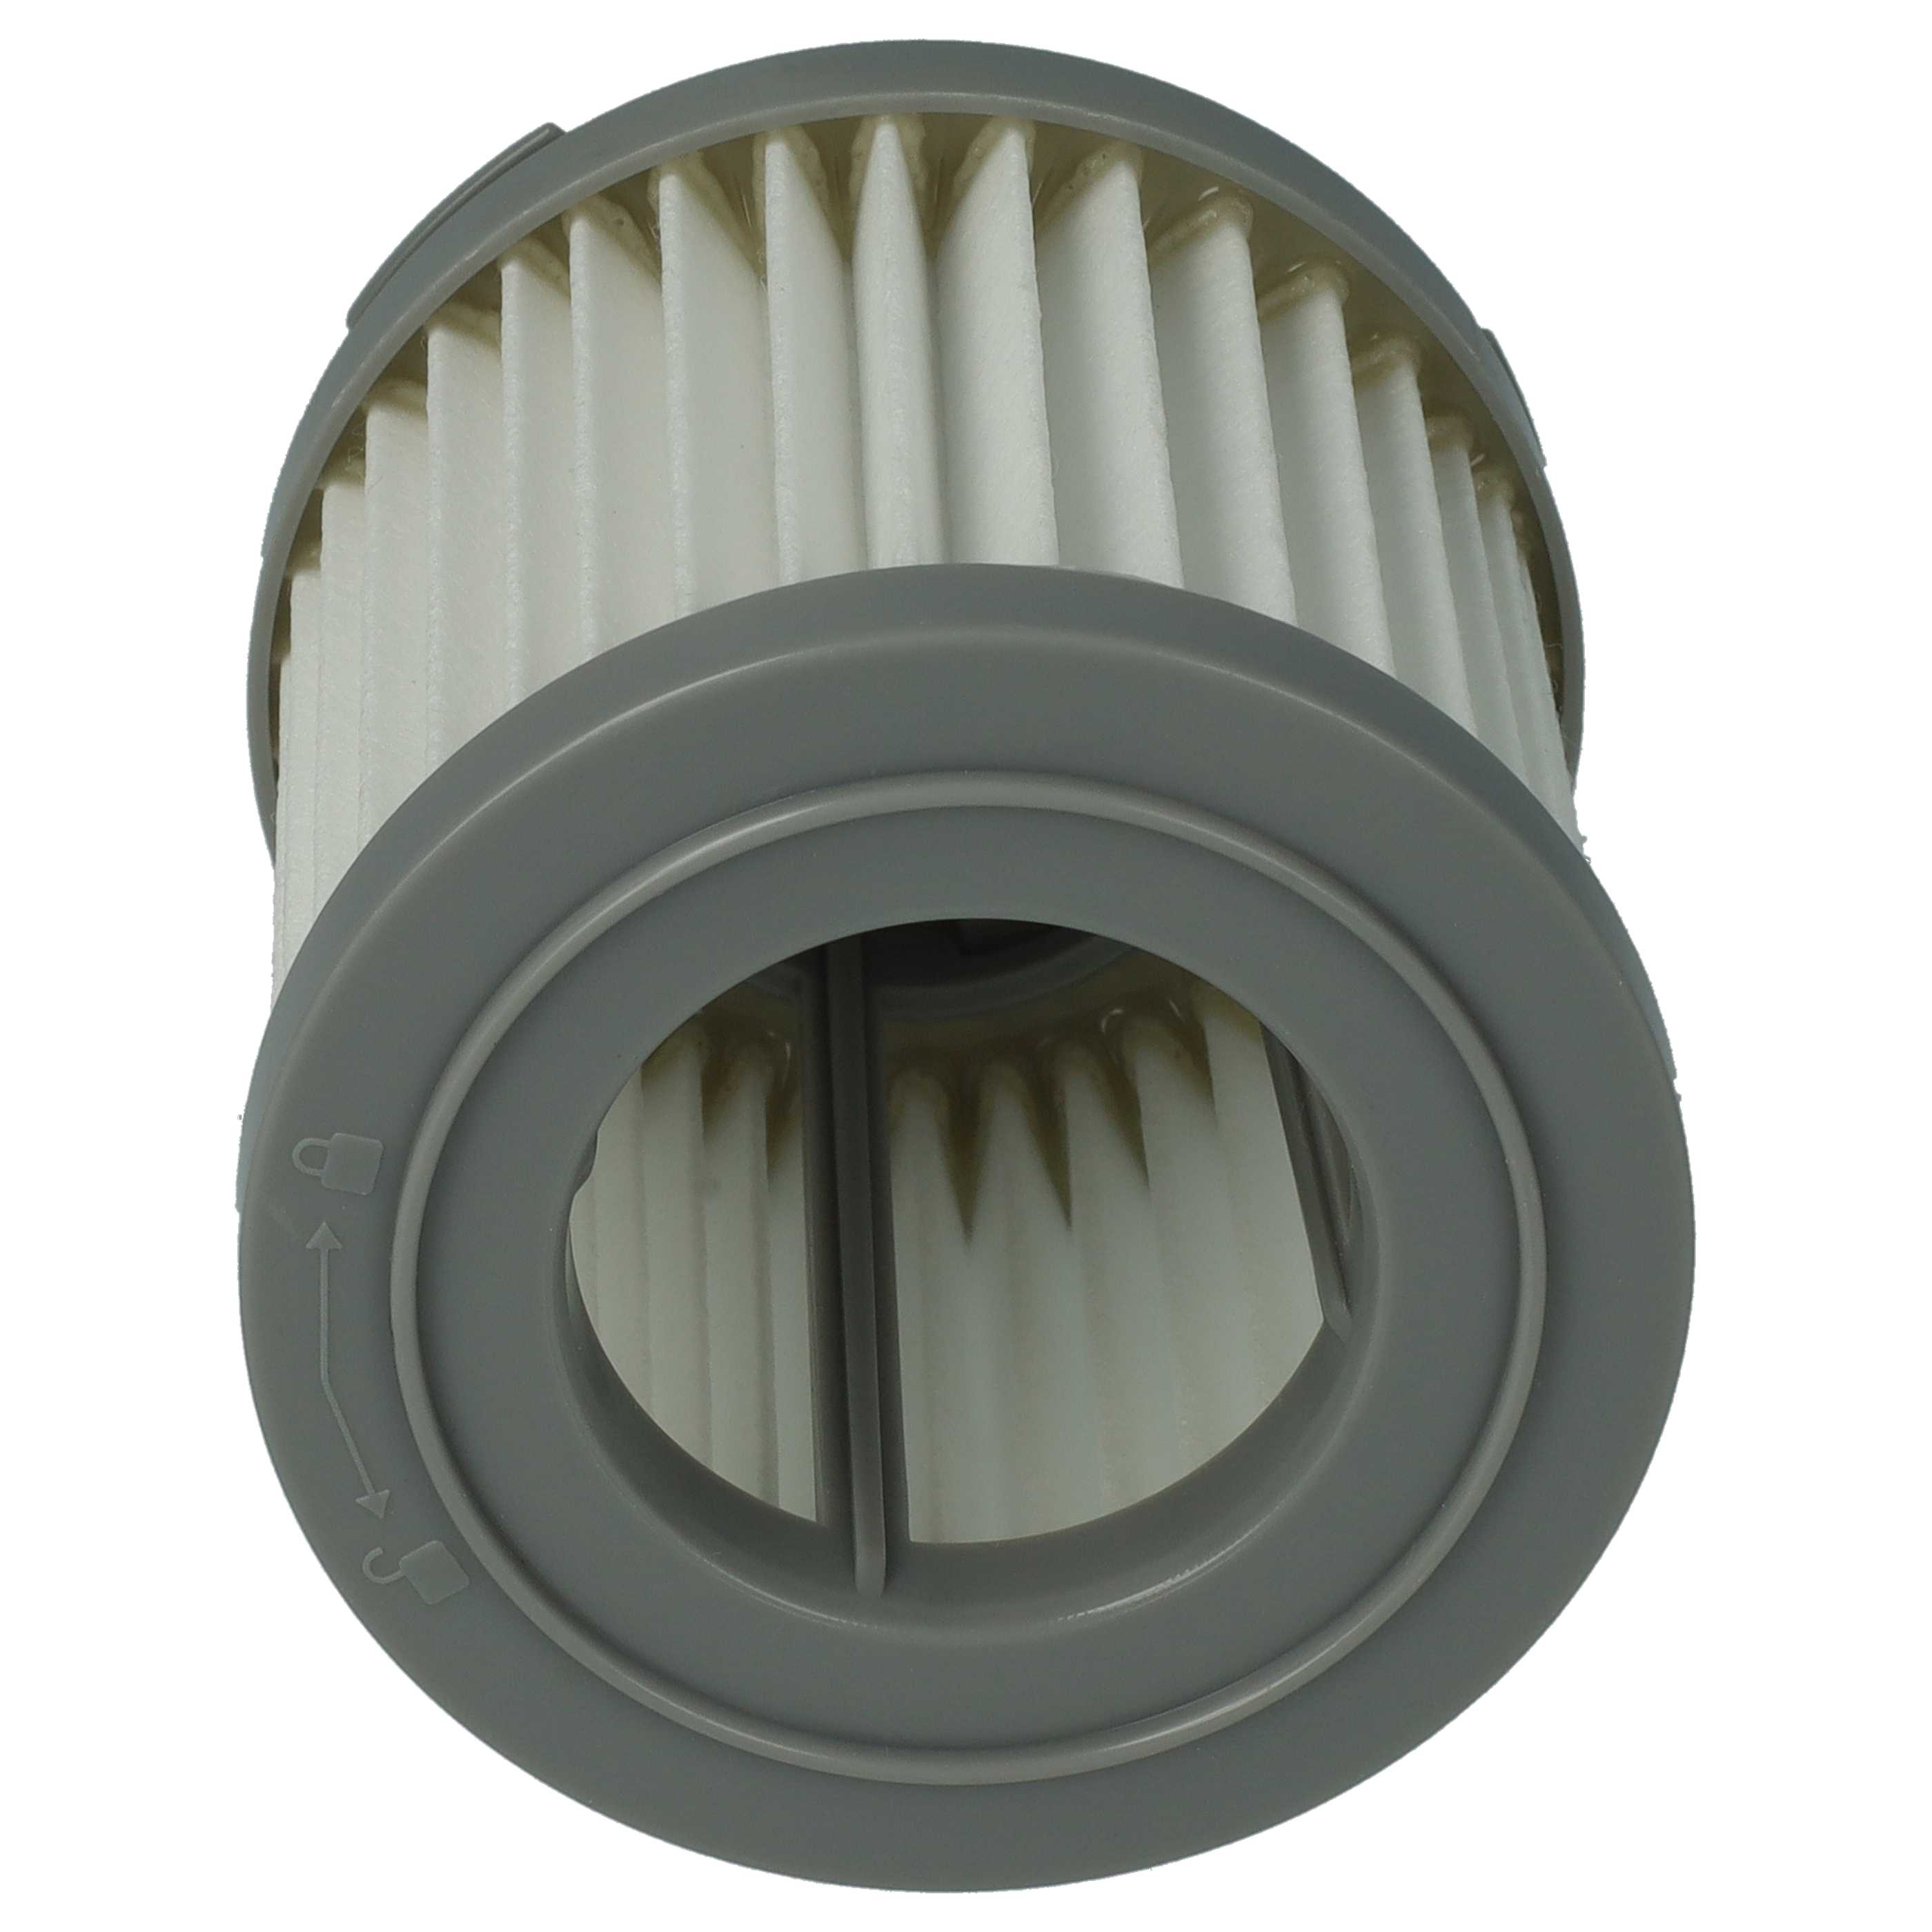 Filtro reemplaza AEG 4055453288 para aspiradora filtro Hepa, blanco / gris